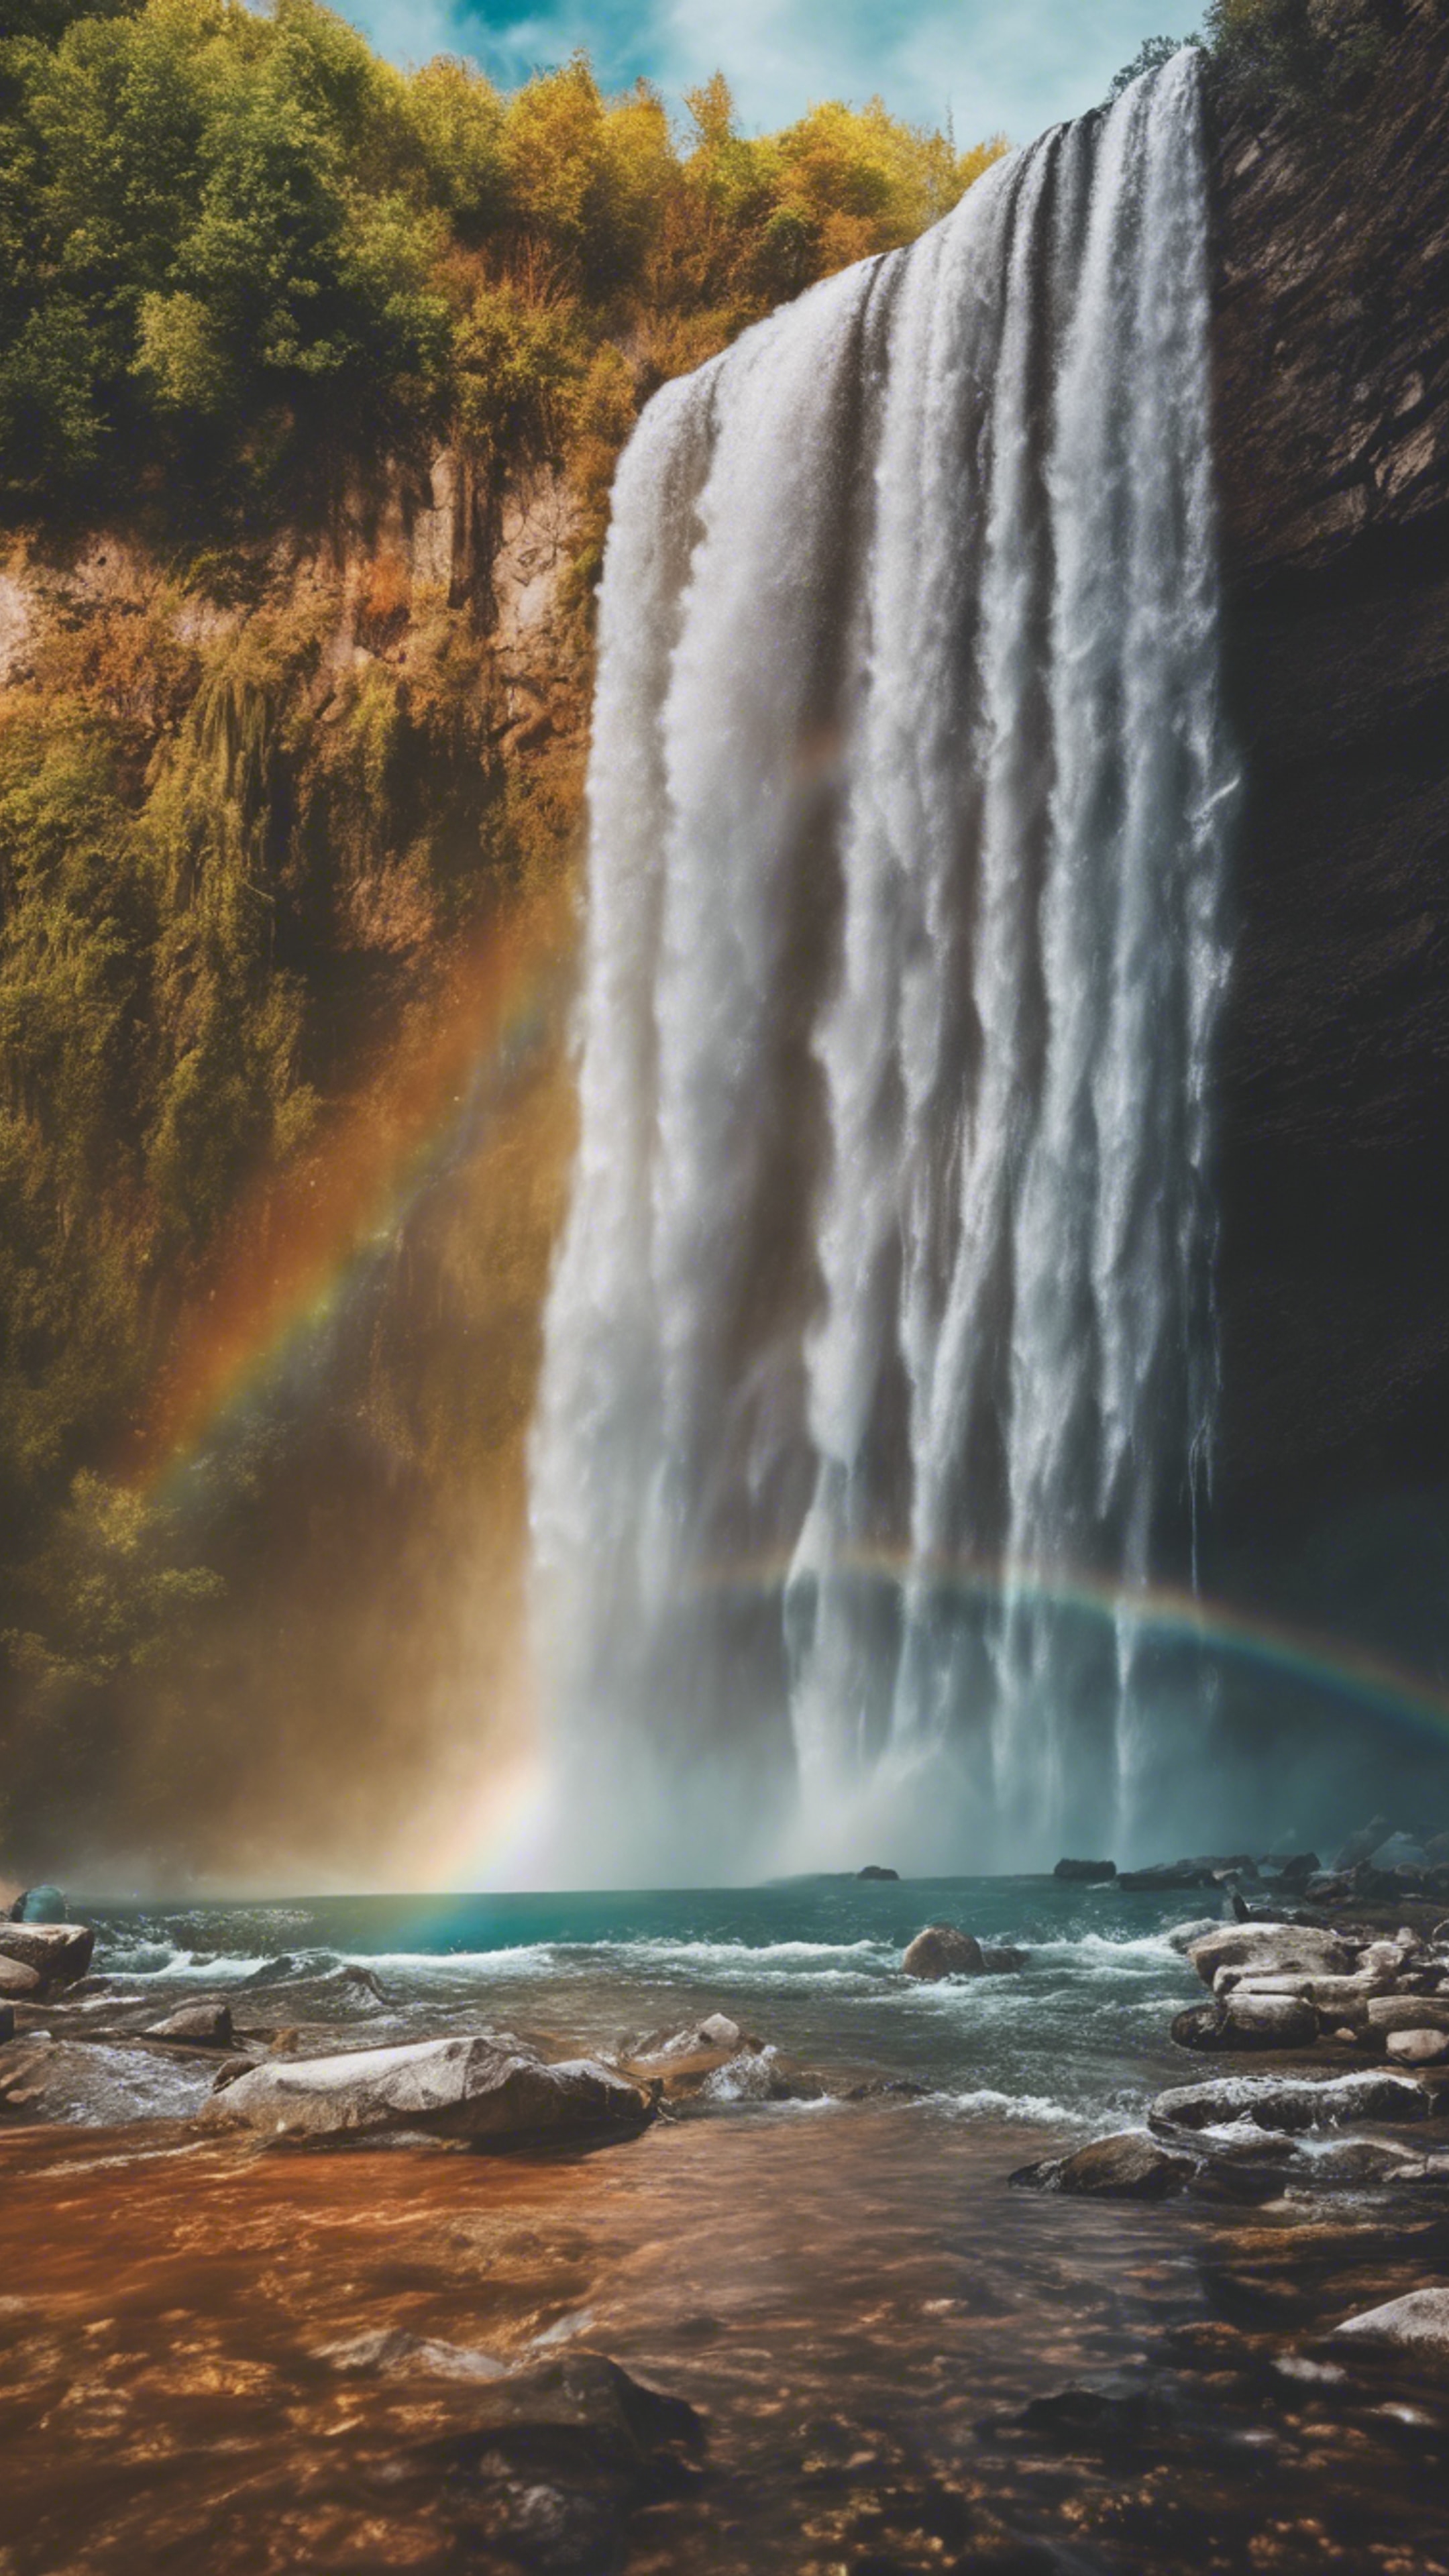 A vibrant boho rainbow appearing over a cascading waterfall. Wallpaper[97edac784fce4a8a9a7f]